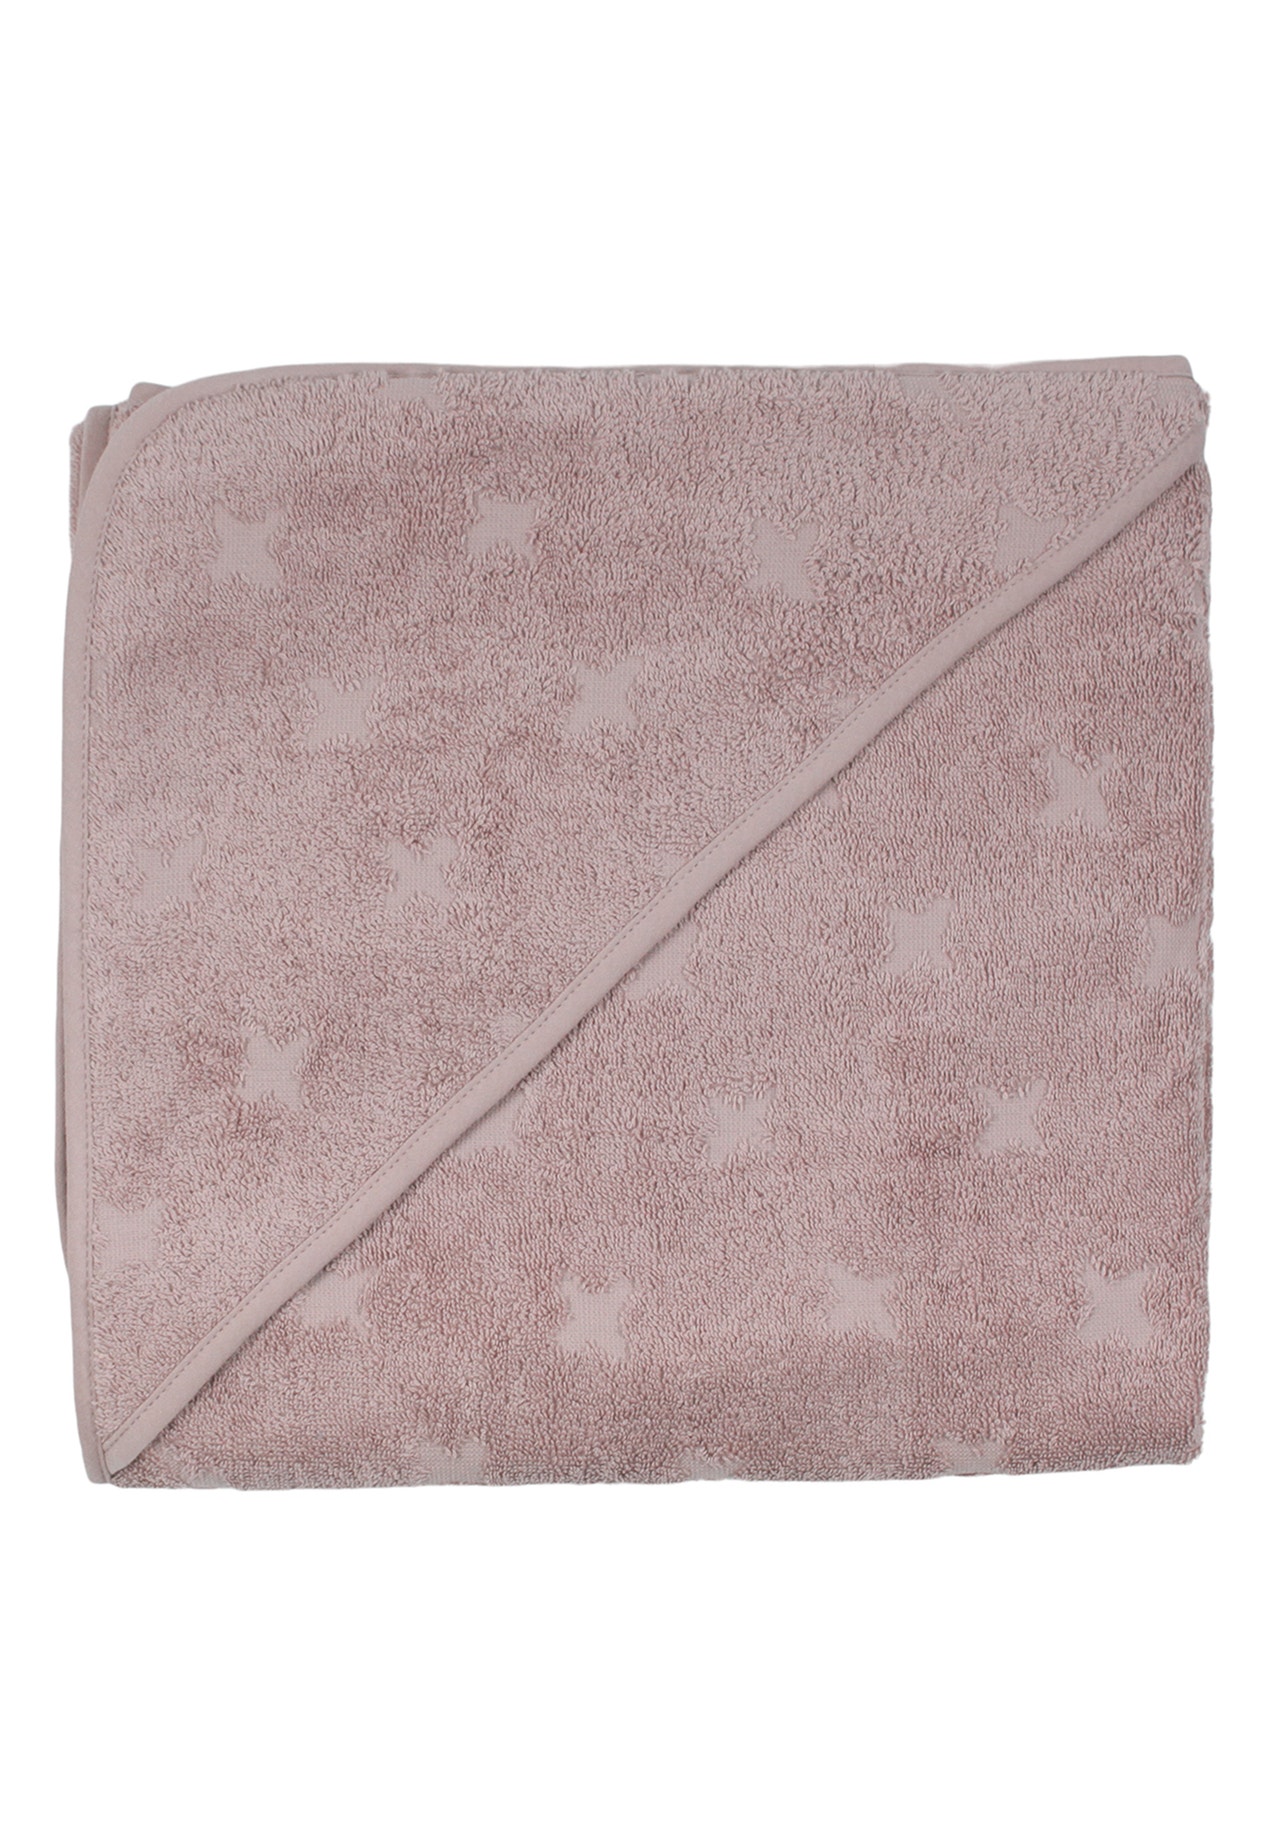 MAMA.LICIOUS müsli swaddle towel -Rose Wood - 1569002701